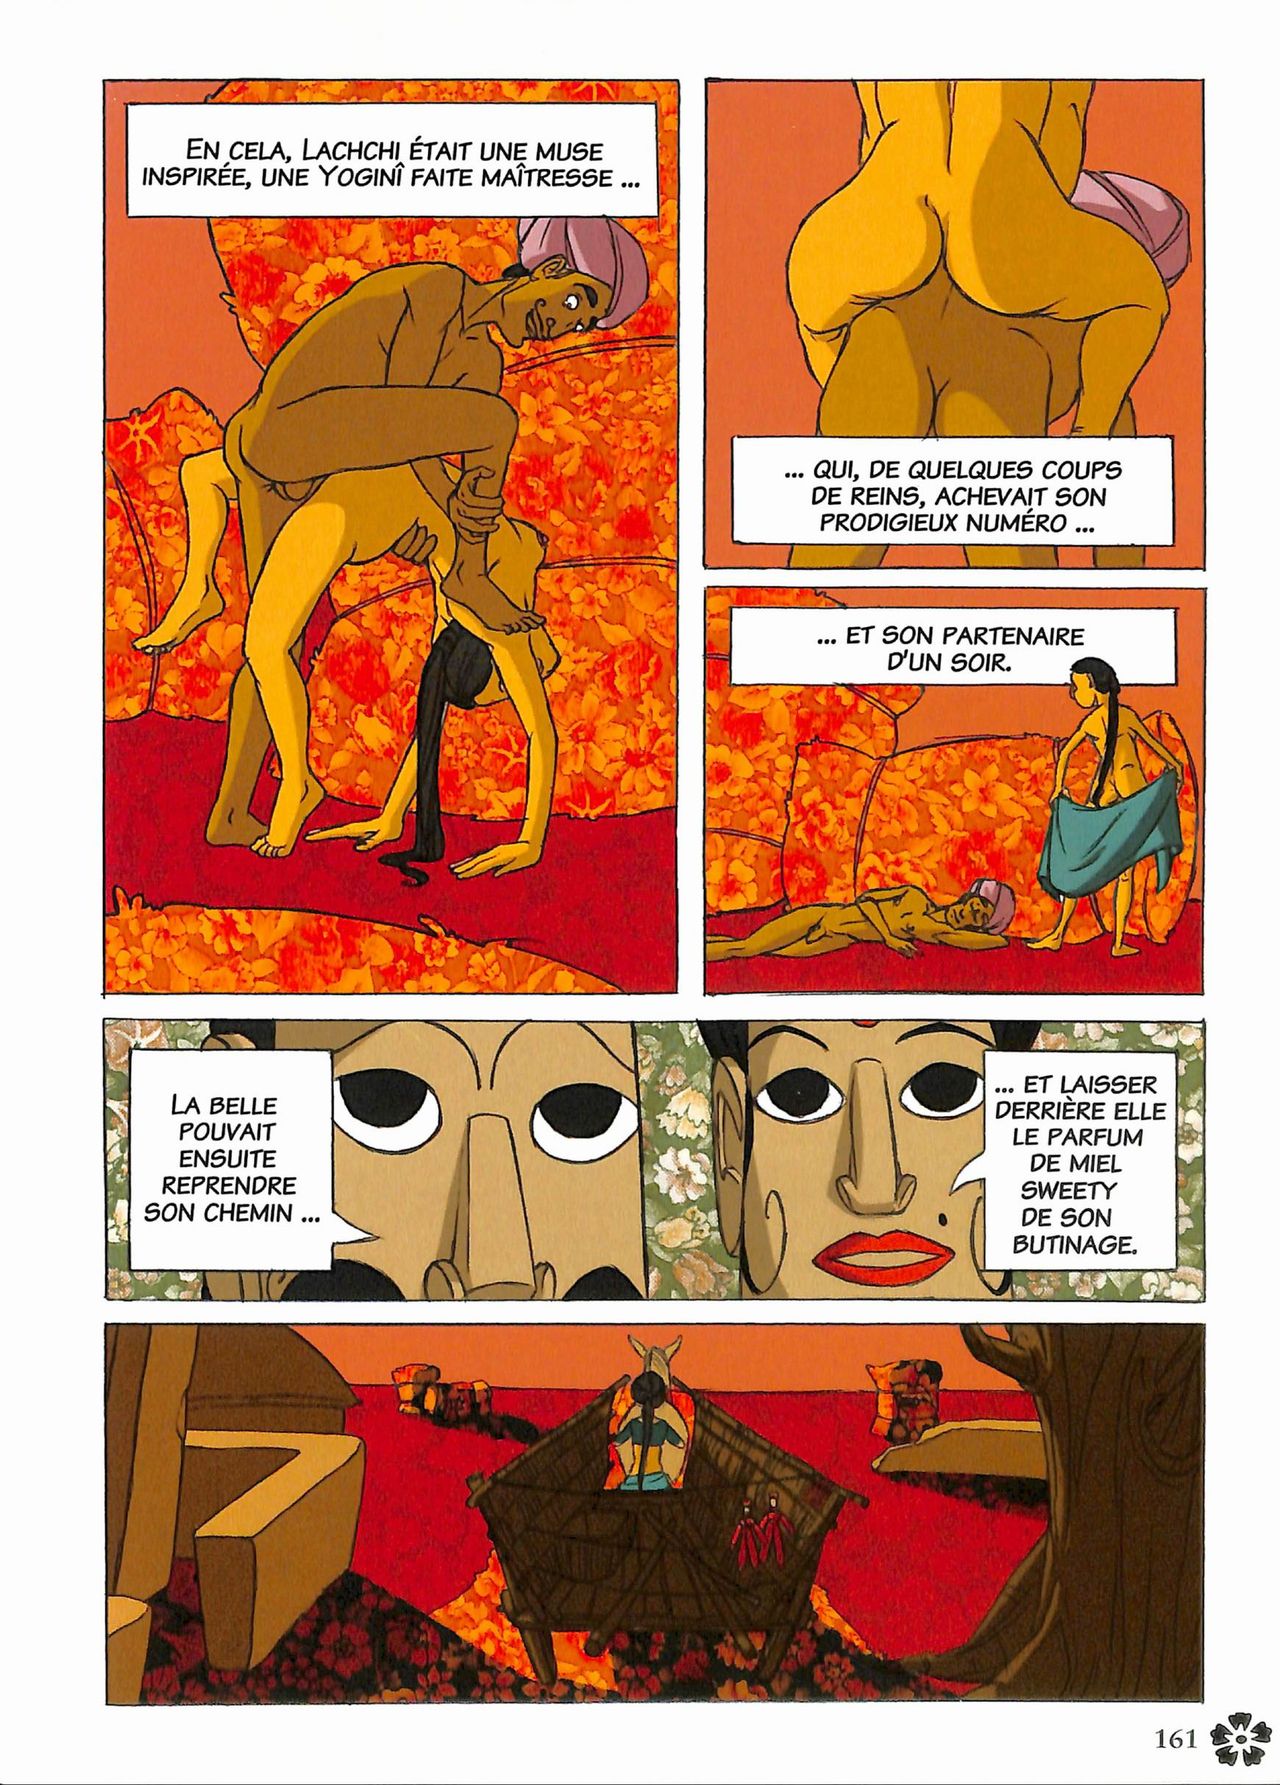 Kama Sutra en bandes dessinées - Kama Sutra with Comics numero d'image 161